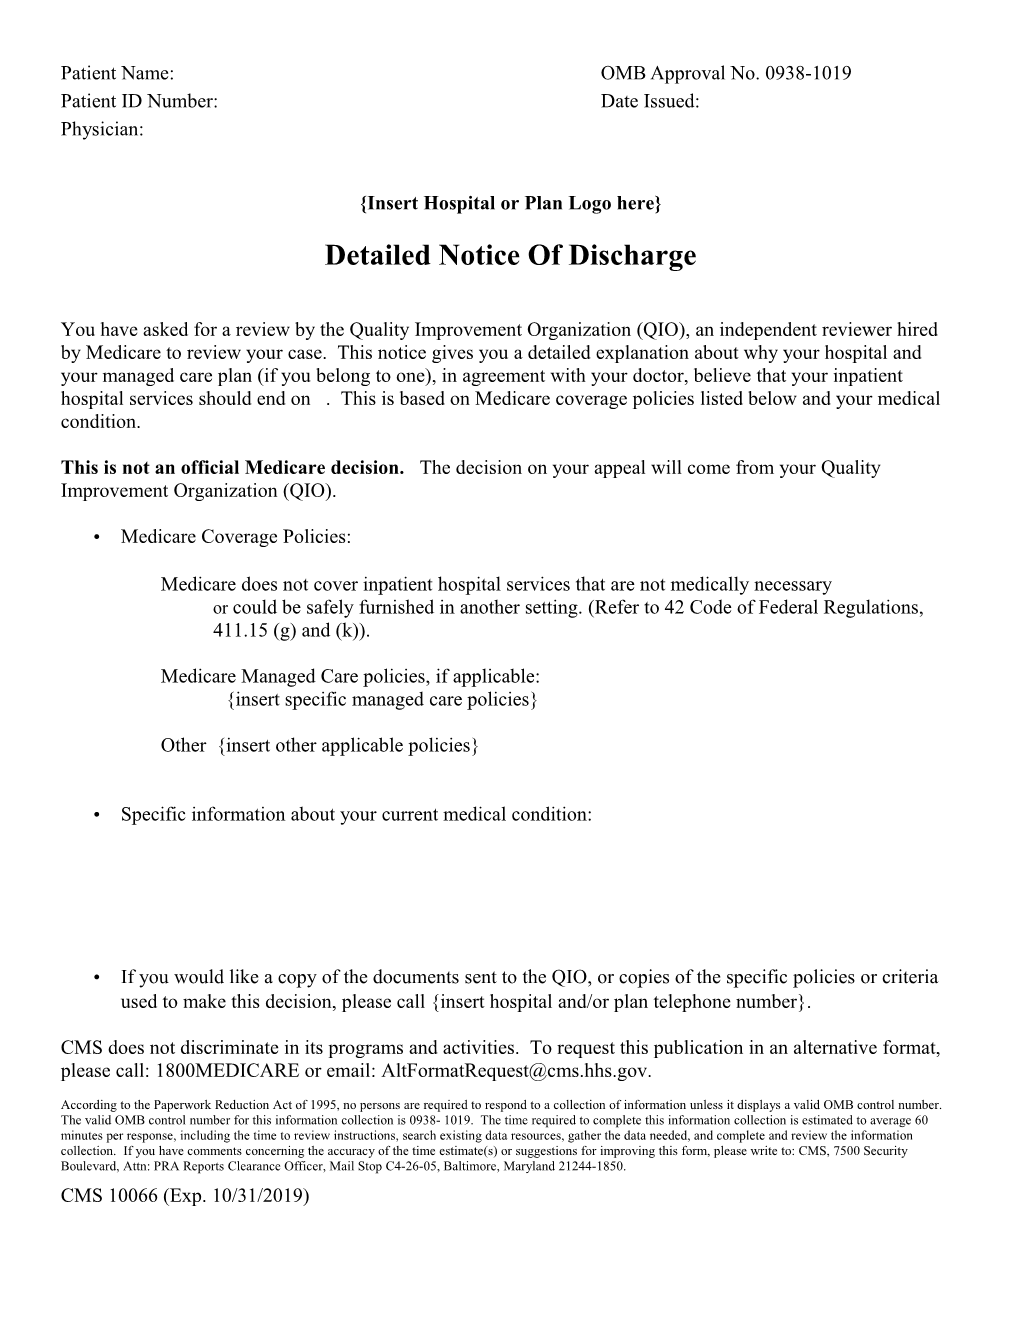 Detailed Notice of Discharge